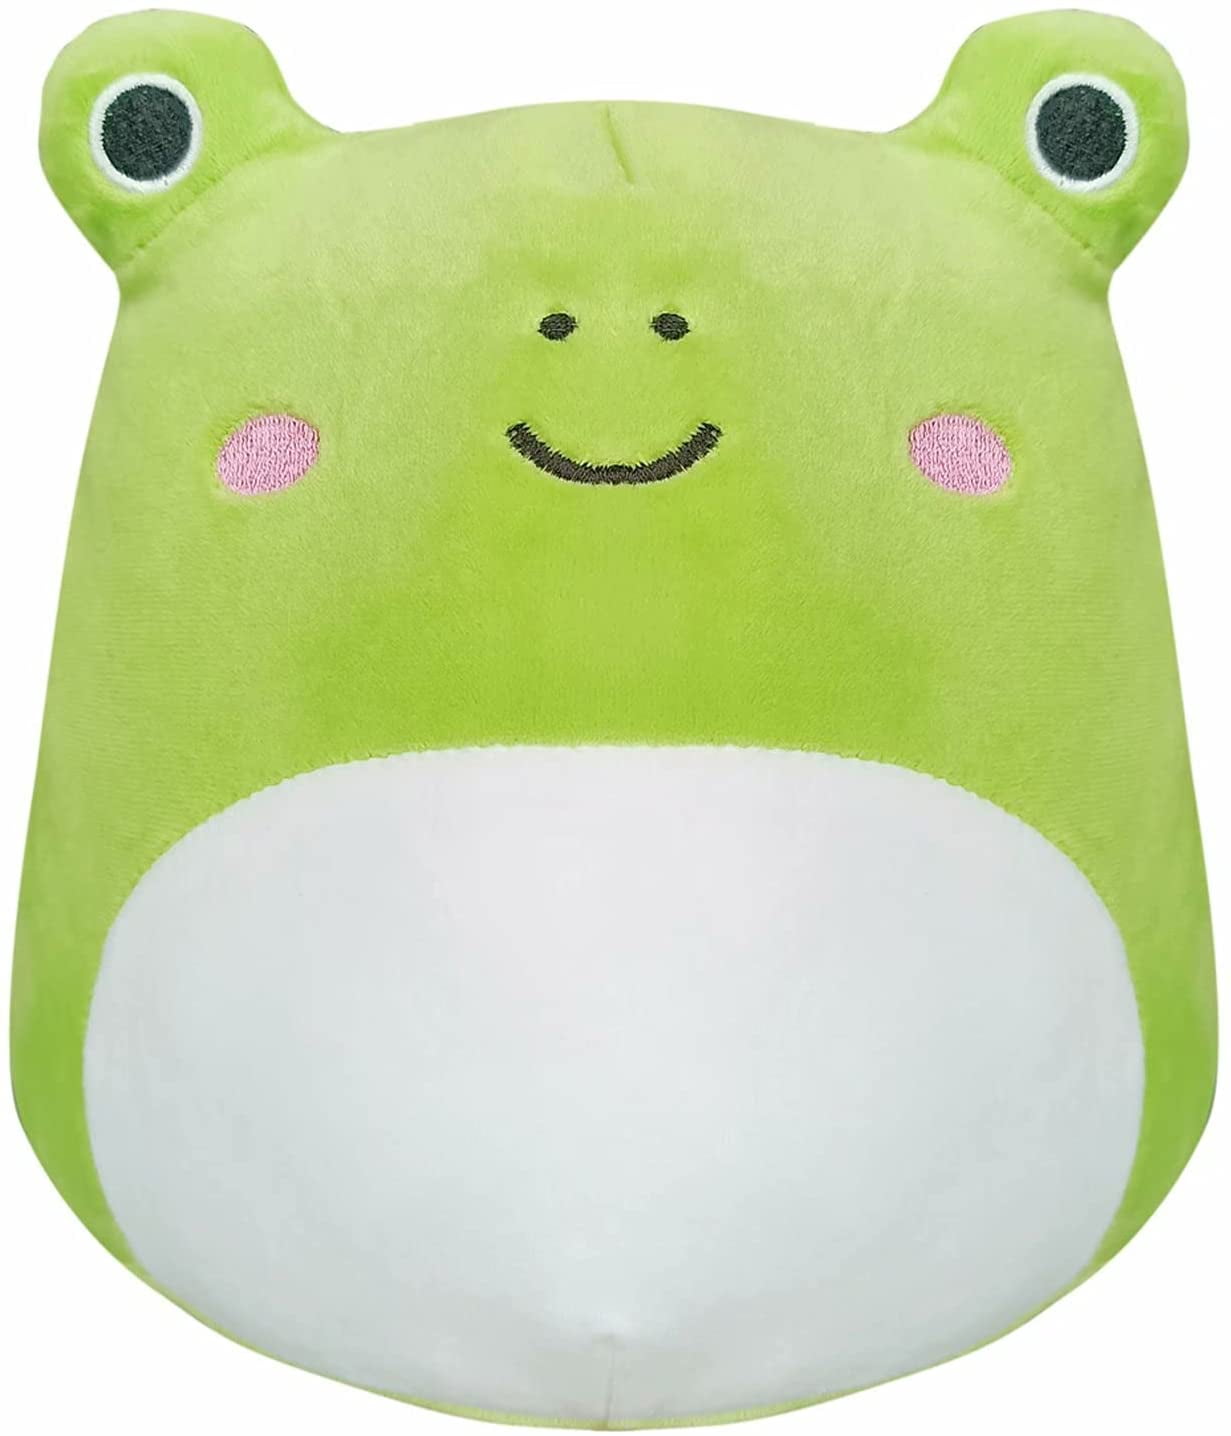 3D animals Soft plush Baby Neck pillow frog bear cat 3D comfort travel 